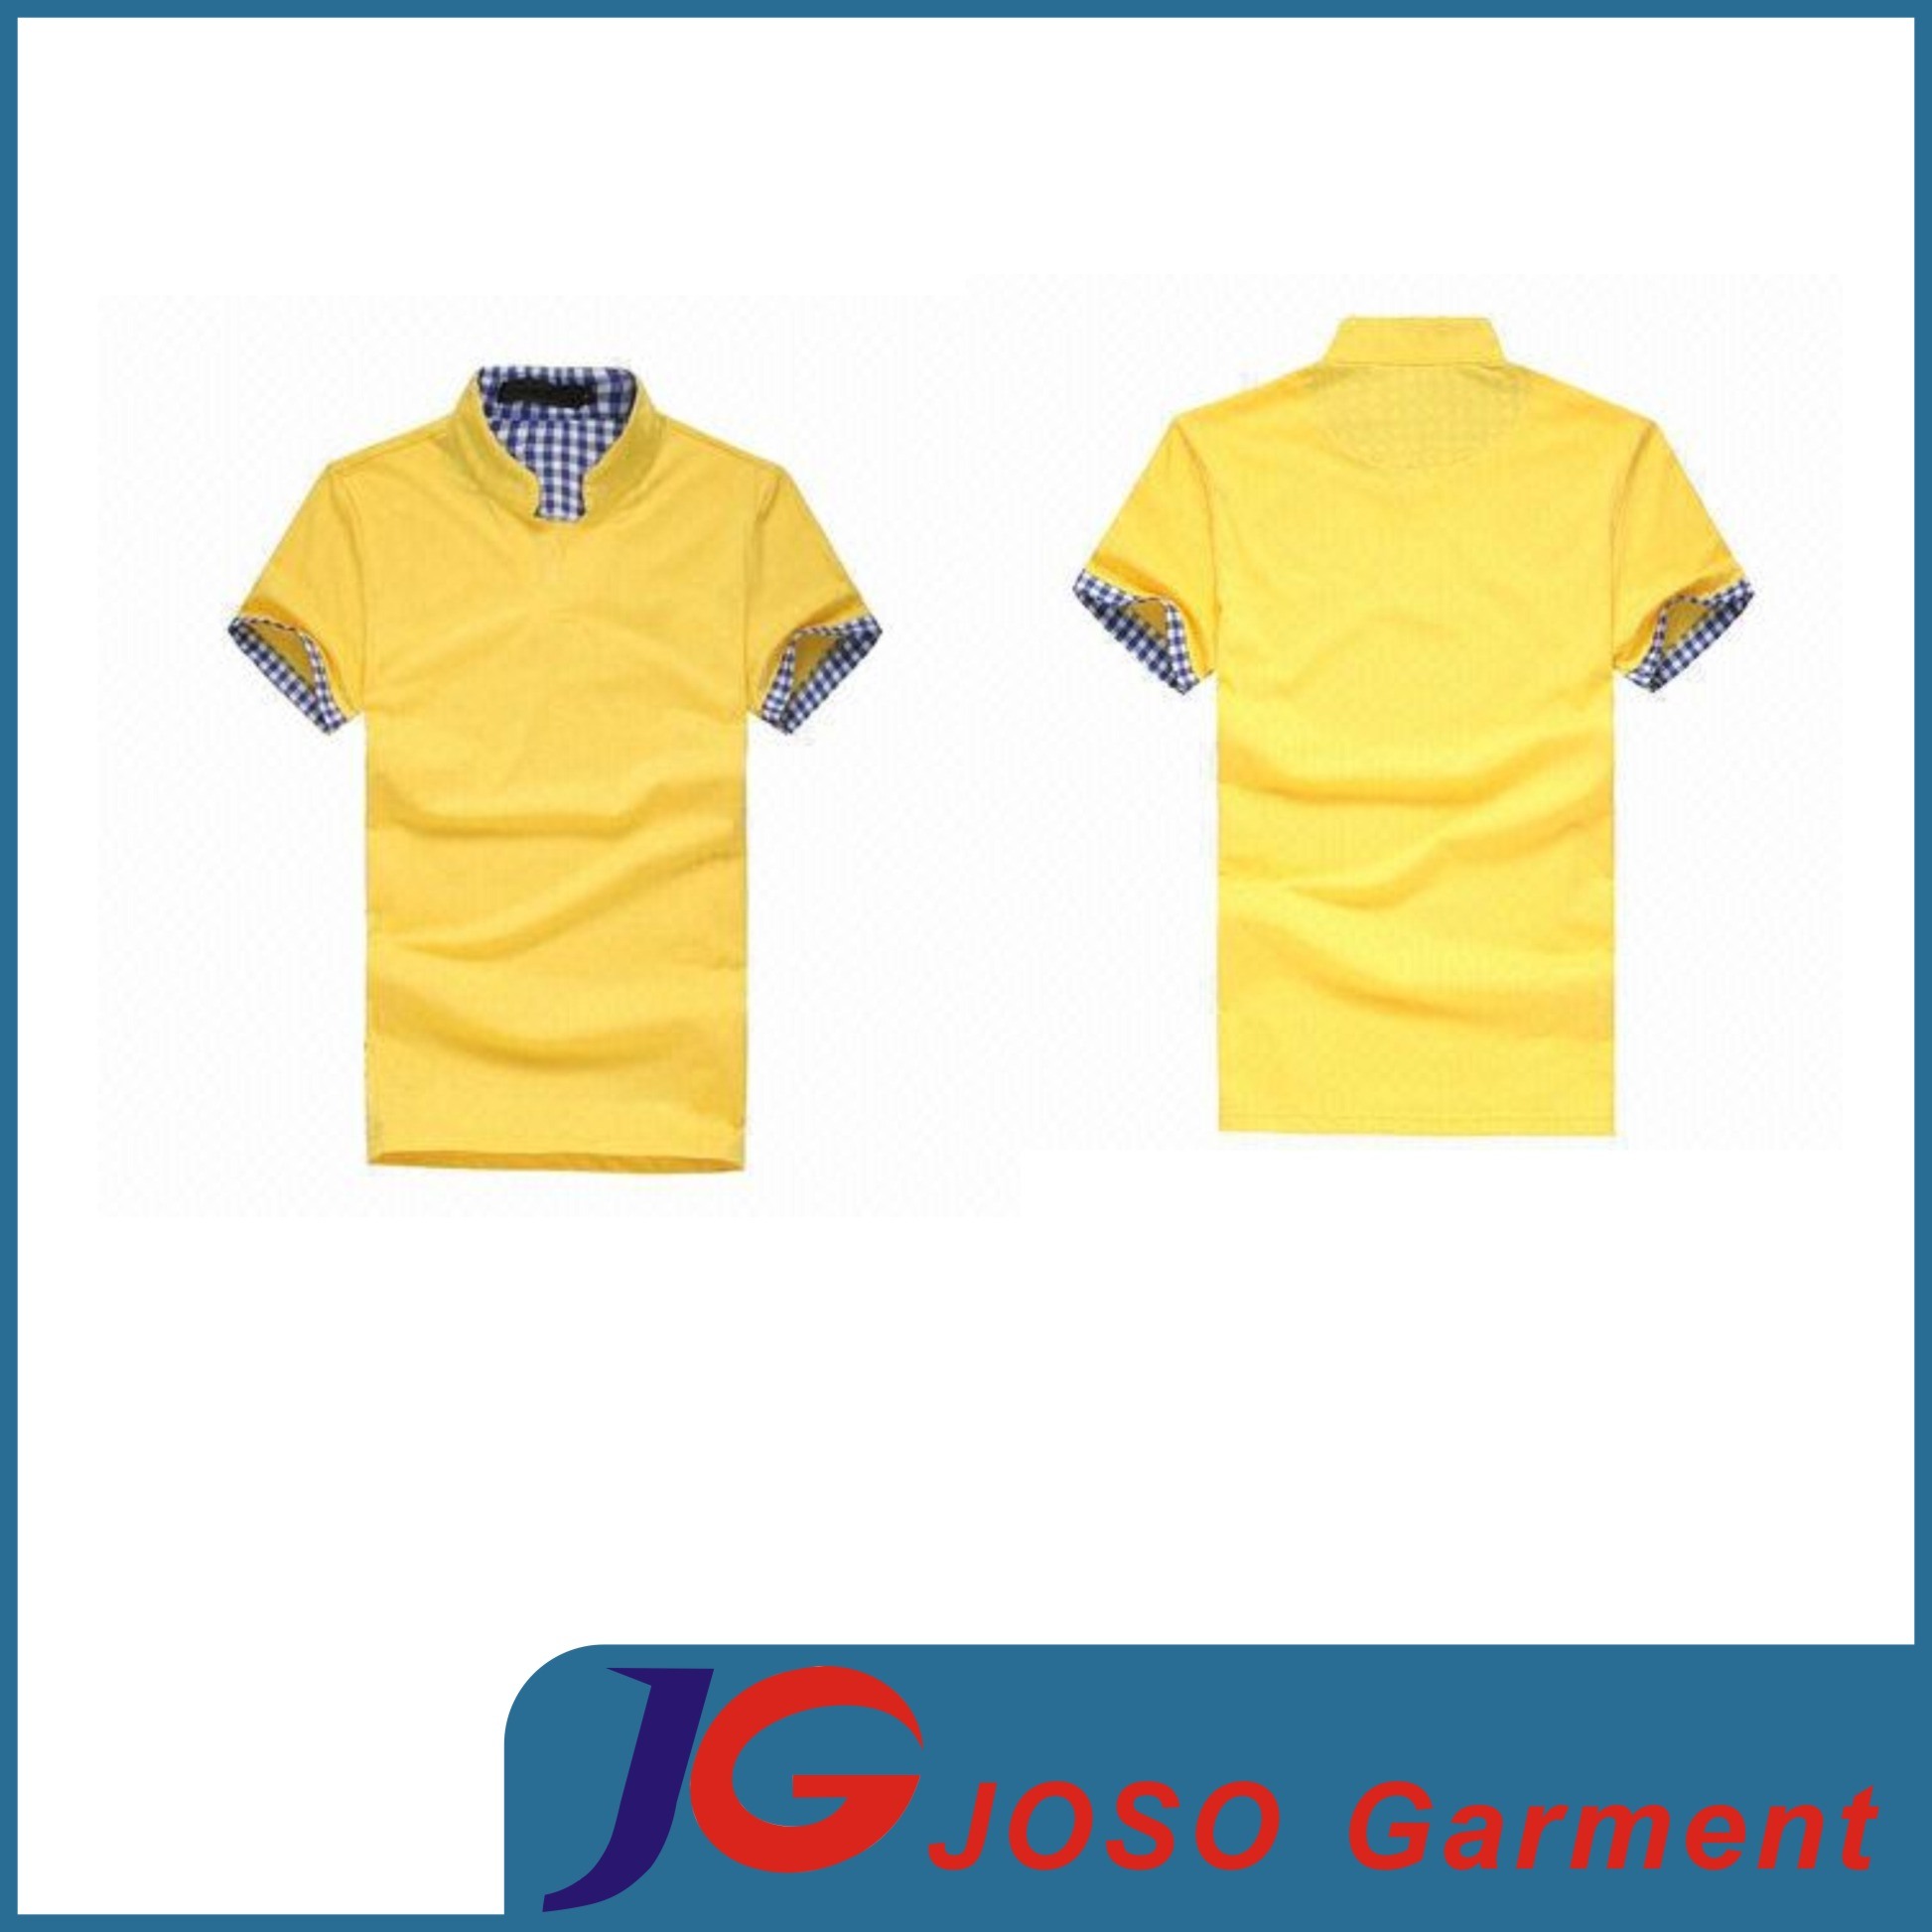 Shop Online Yellow Polo Neck Casual Shirts Tee Shirt (JS9012m)